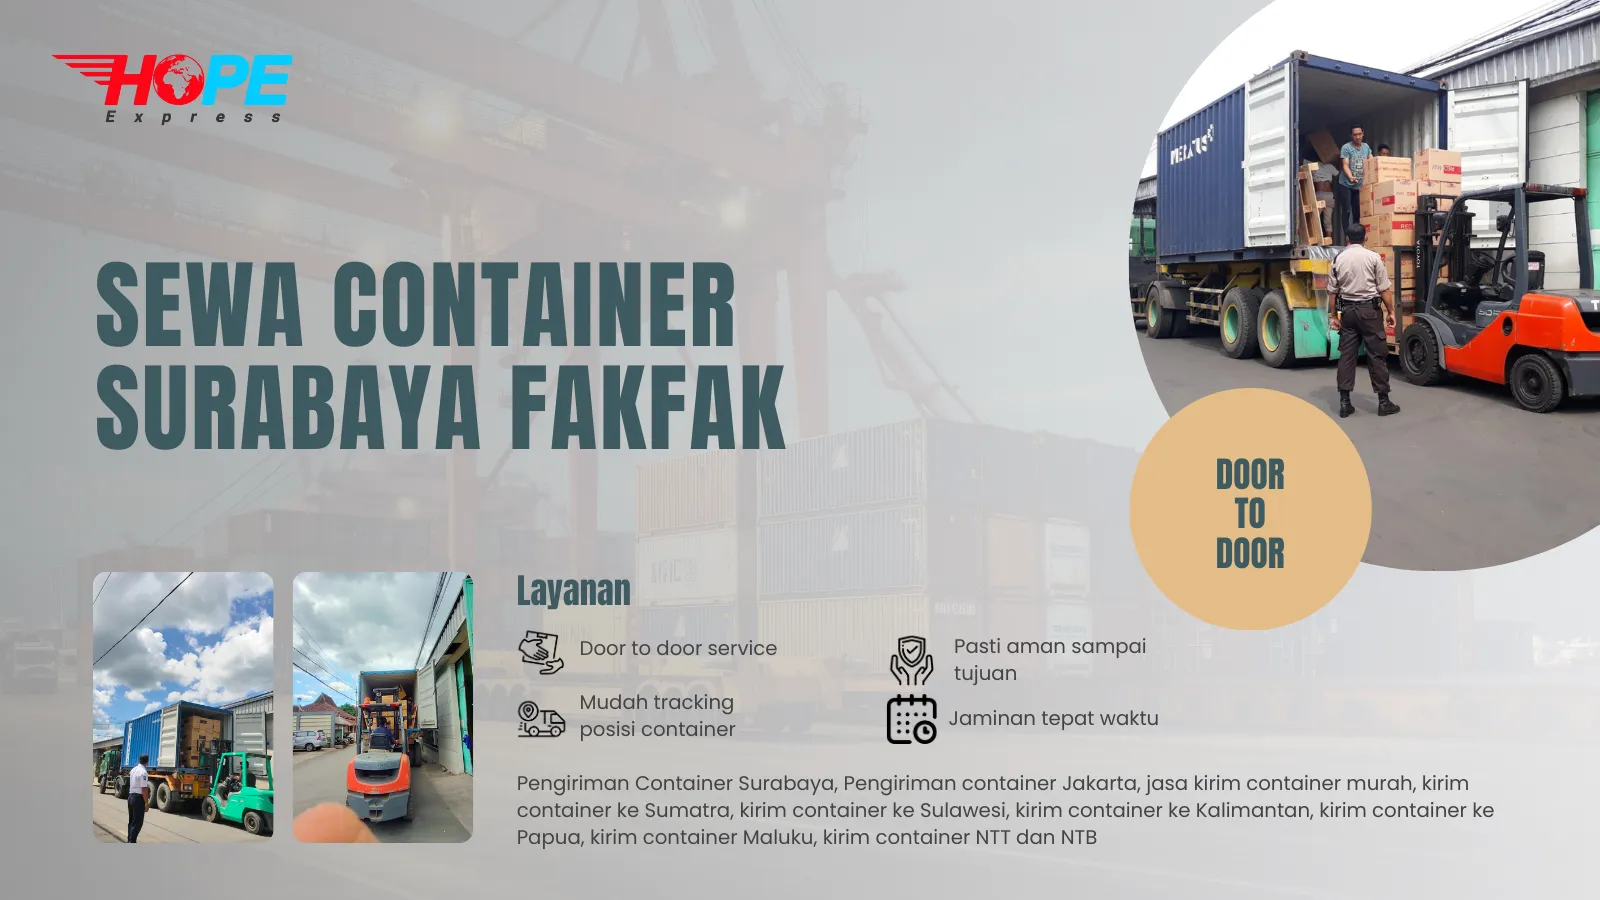 Sewa Container Surabaya Fakfak